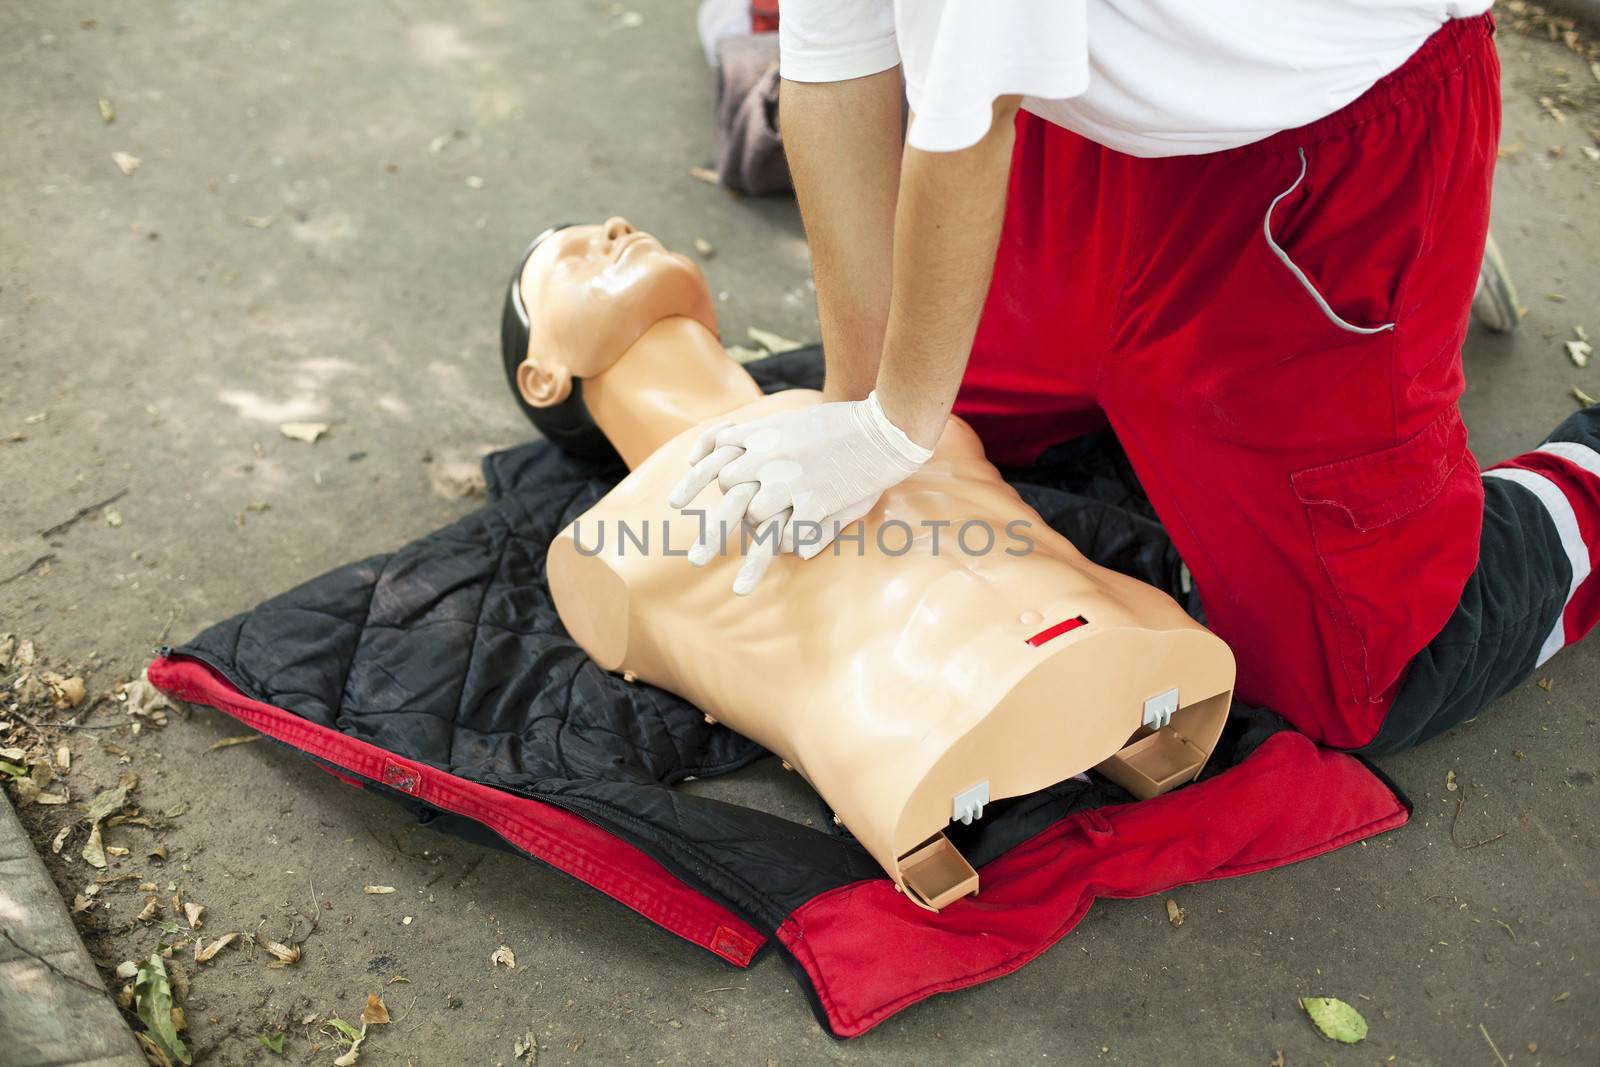 CPR training - heart massage by wellphoto